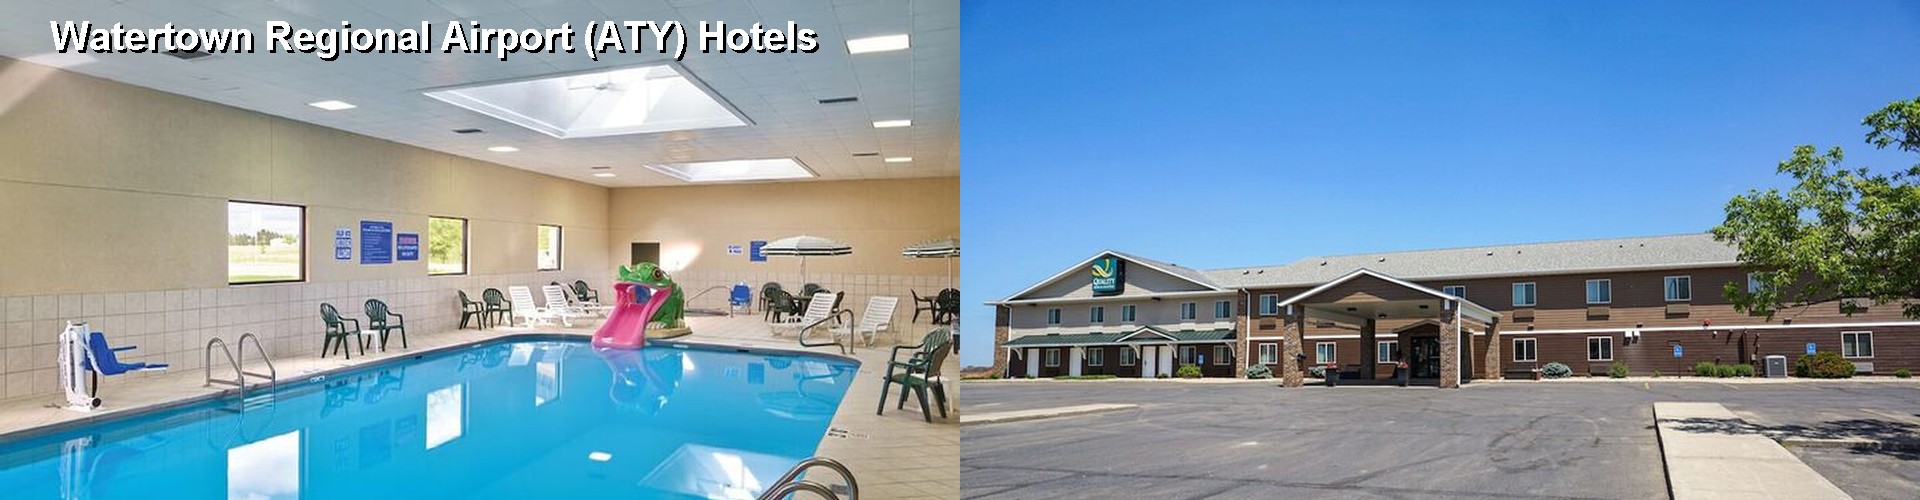 5 Best Hotels near Watertown Regional Airport (ATY)